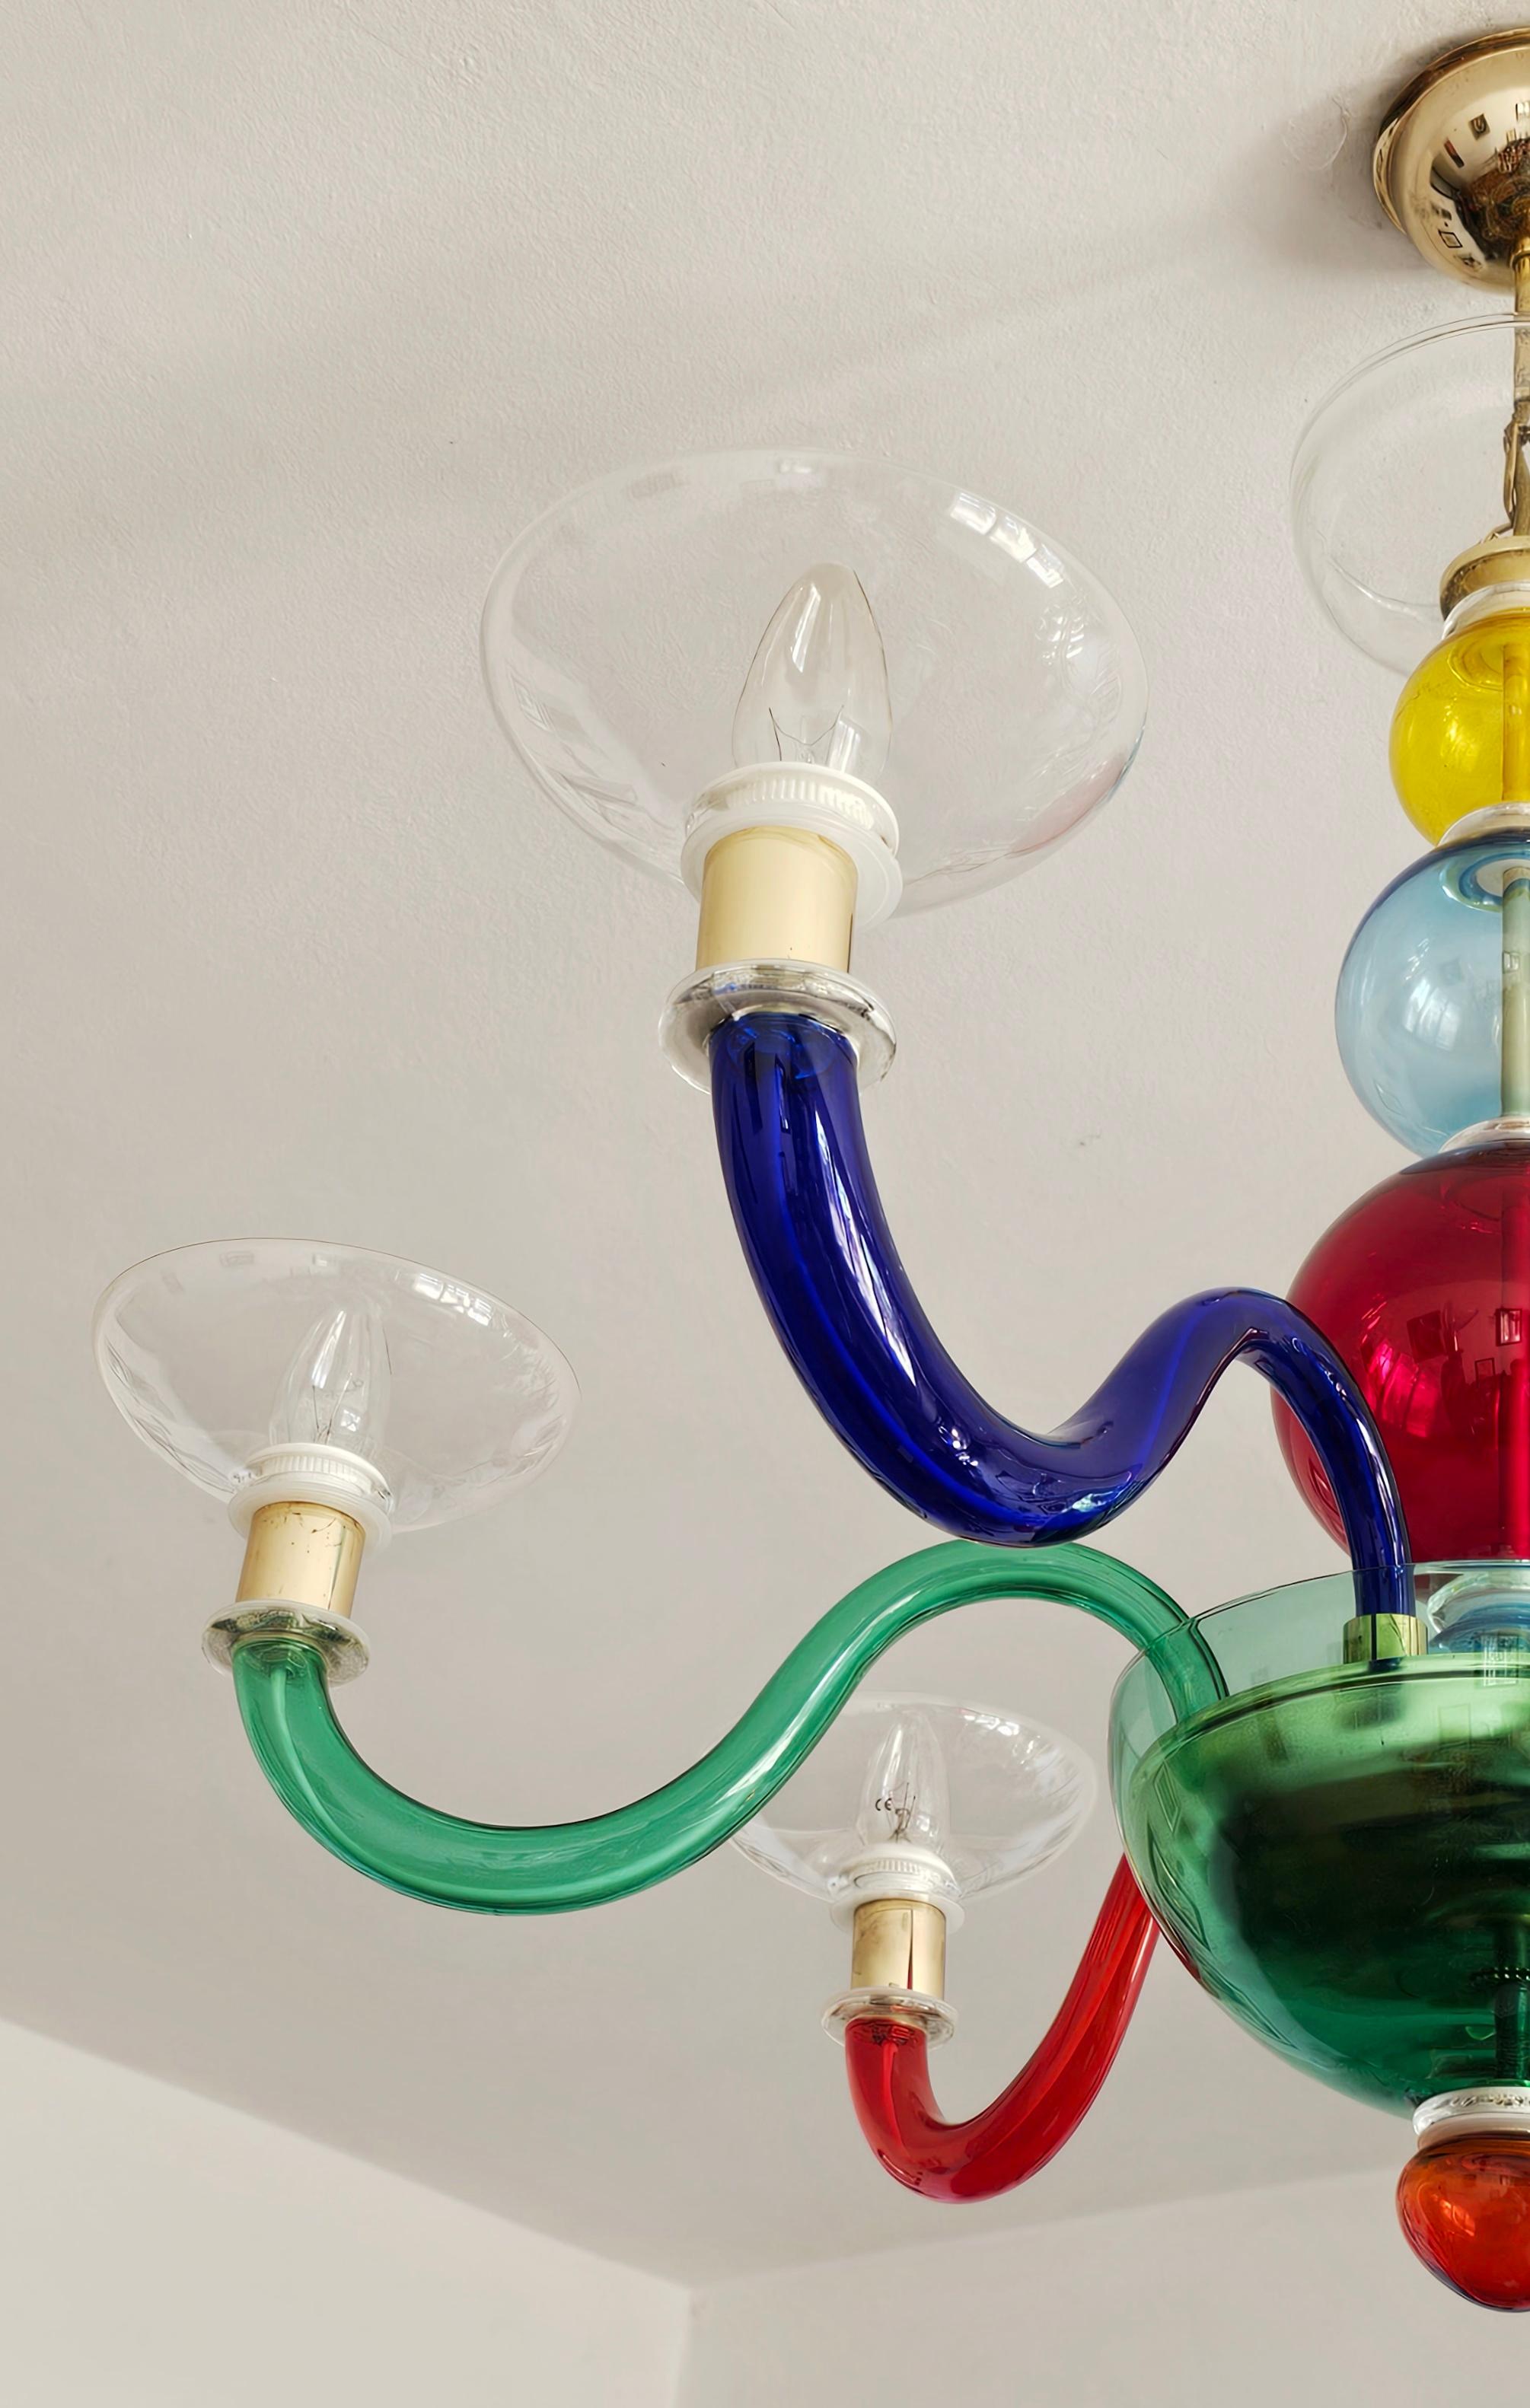 Multicolor Murano Glass Chandelier in style of Gio Ponti for Venini, Italy 1970s For Sale 3